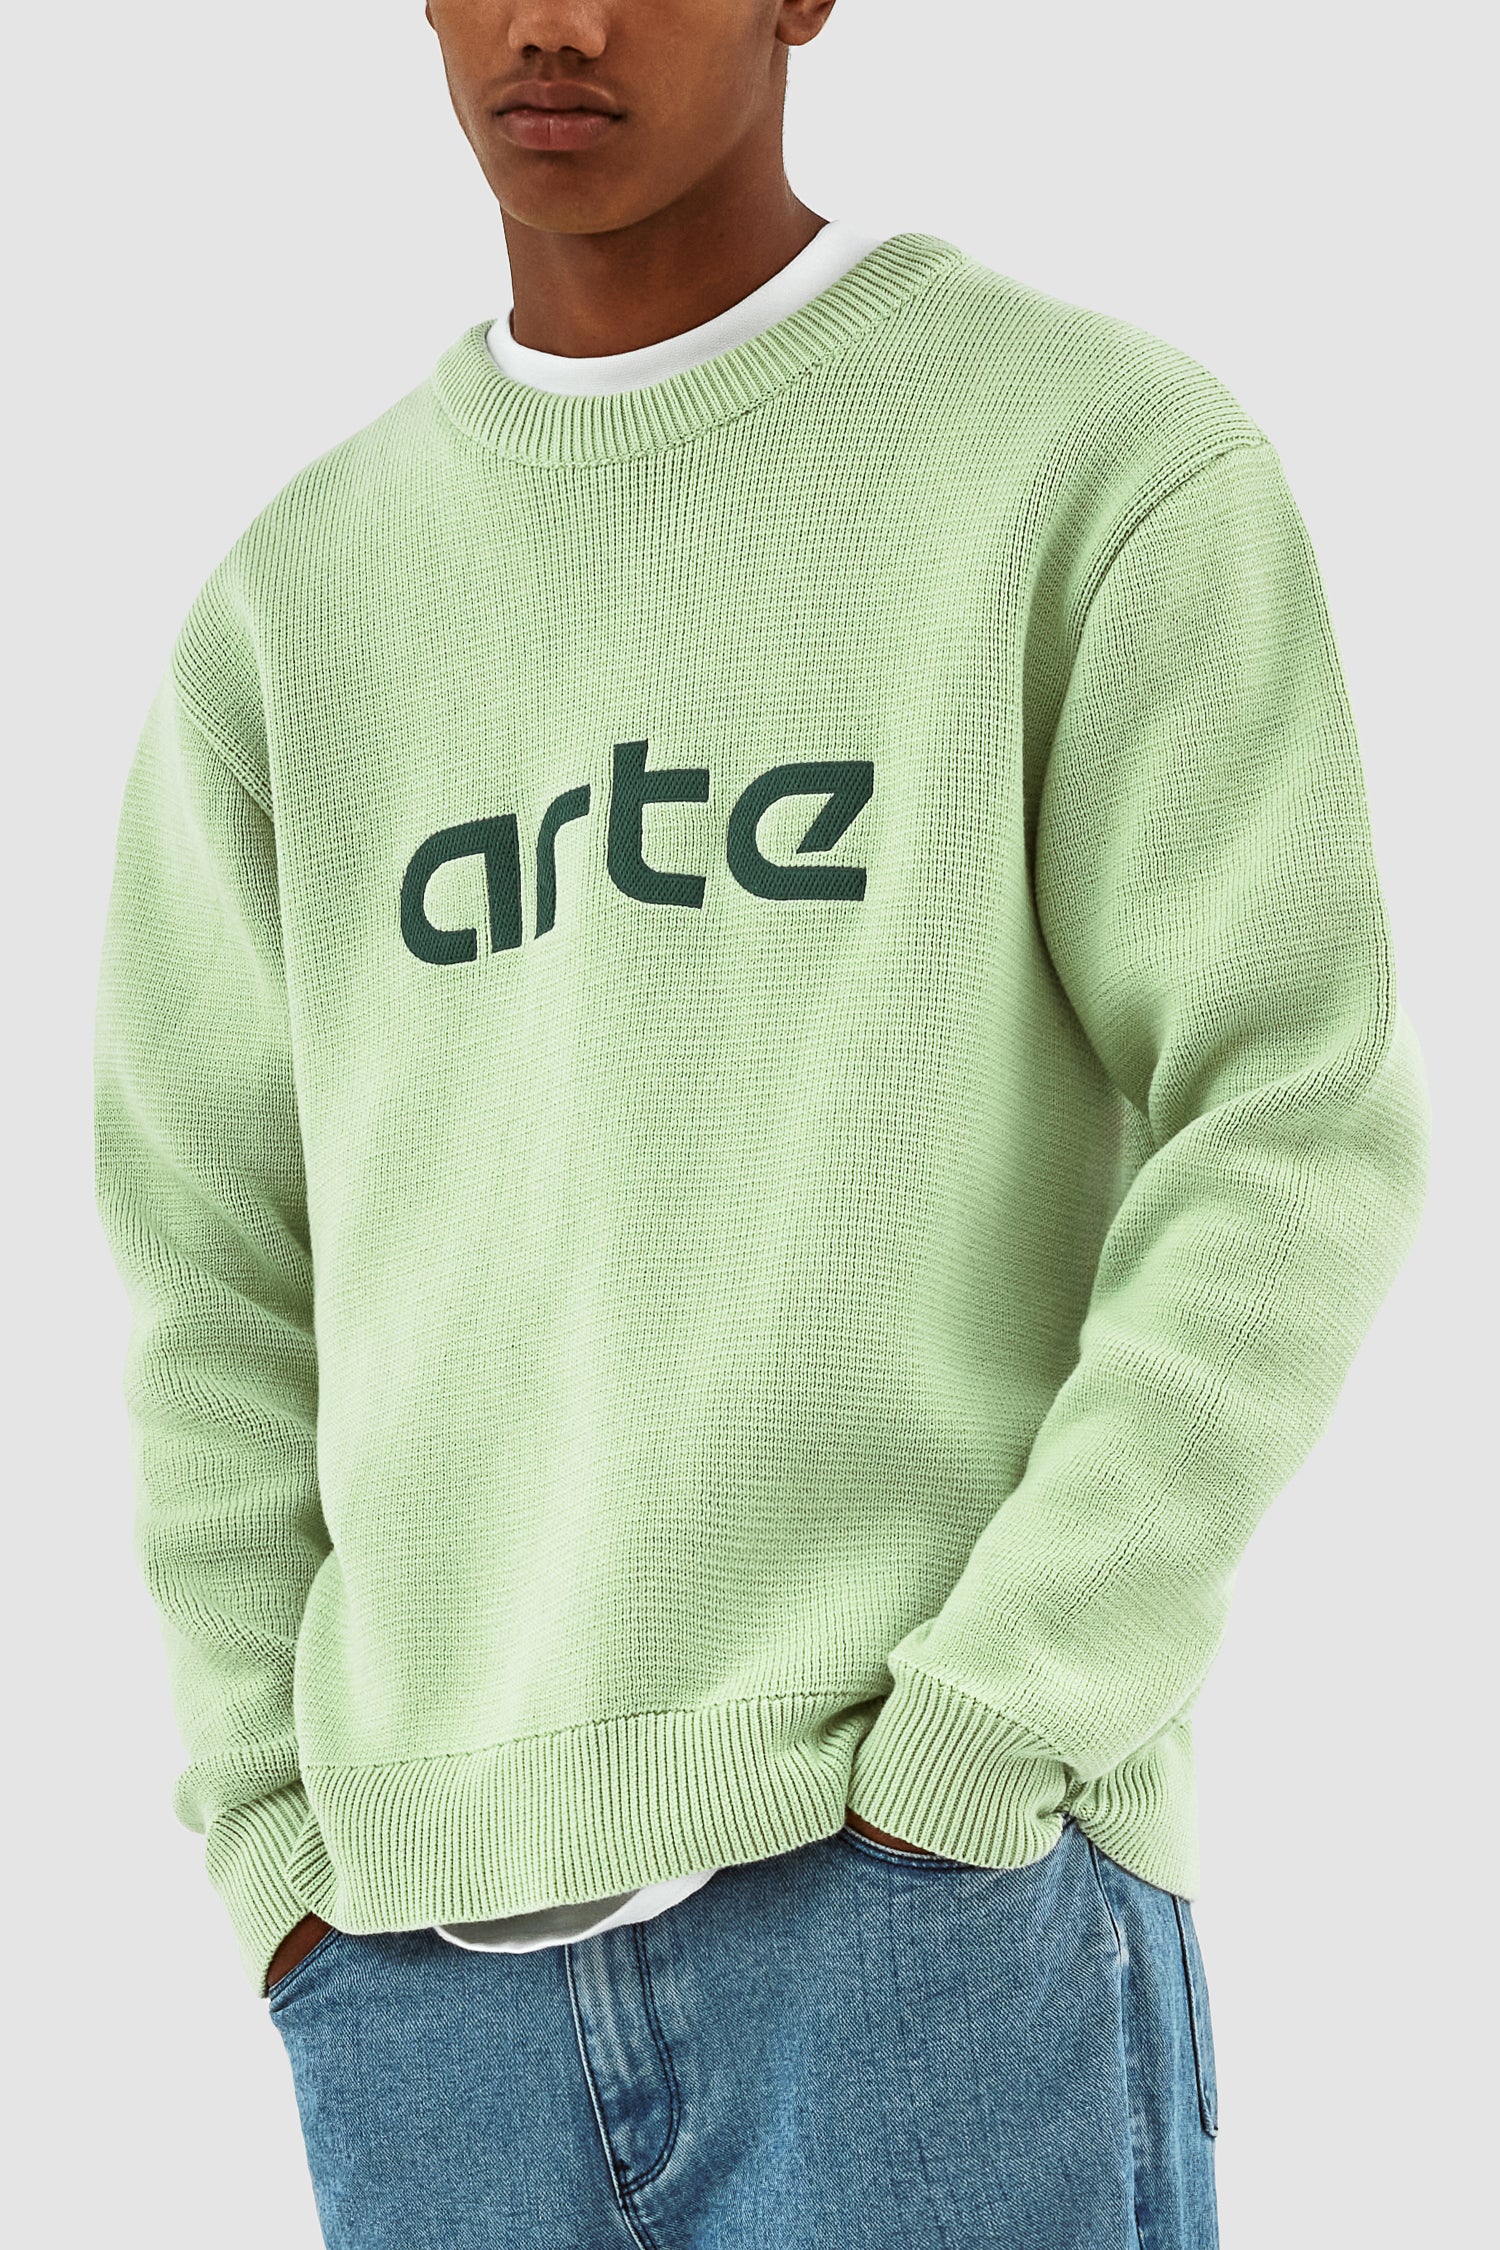 Kris Logo Sweater - Light Green